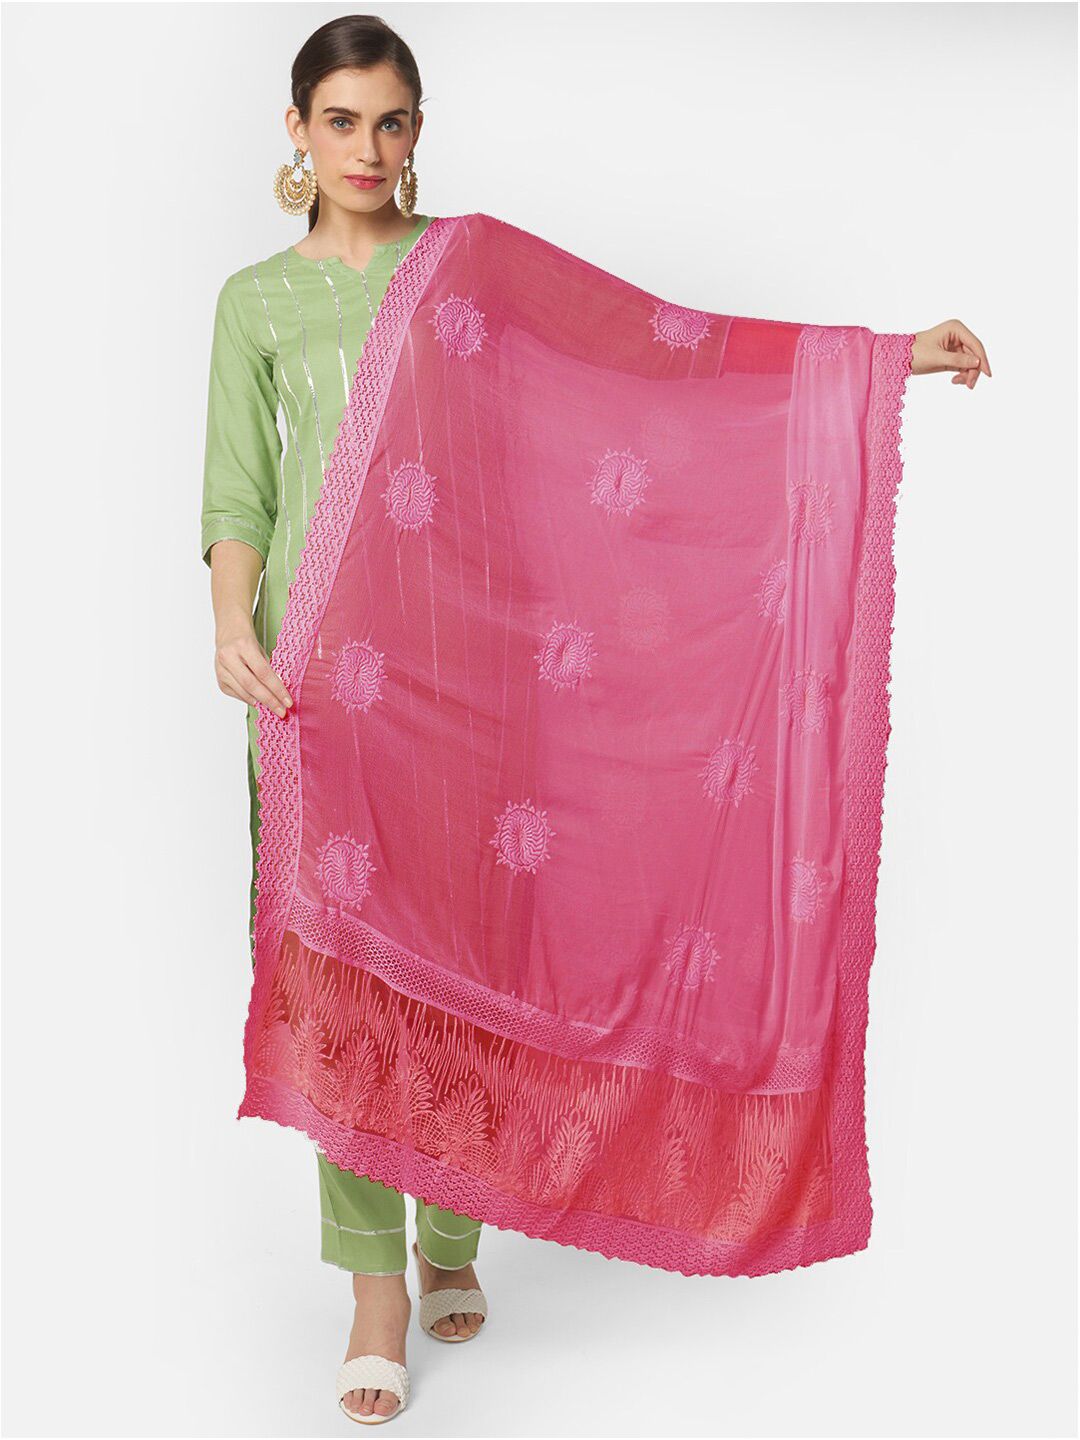 Dupatta Bazaar Pink Ethnic Motifs Embroidered Pure Chiffon Dupatta with Thread Work Price in India